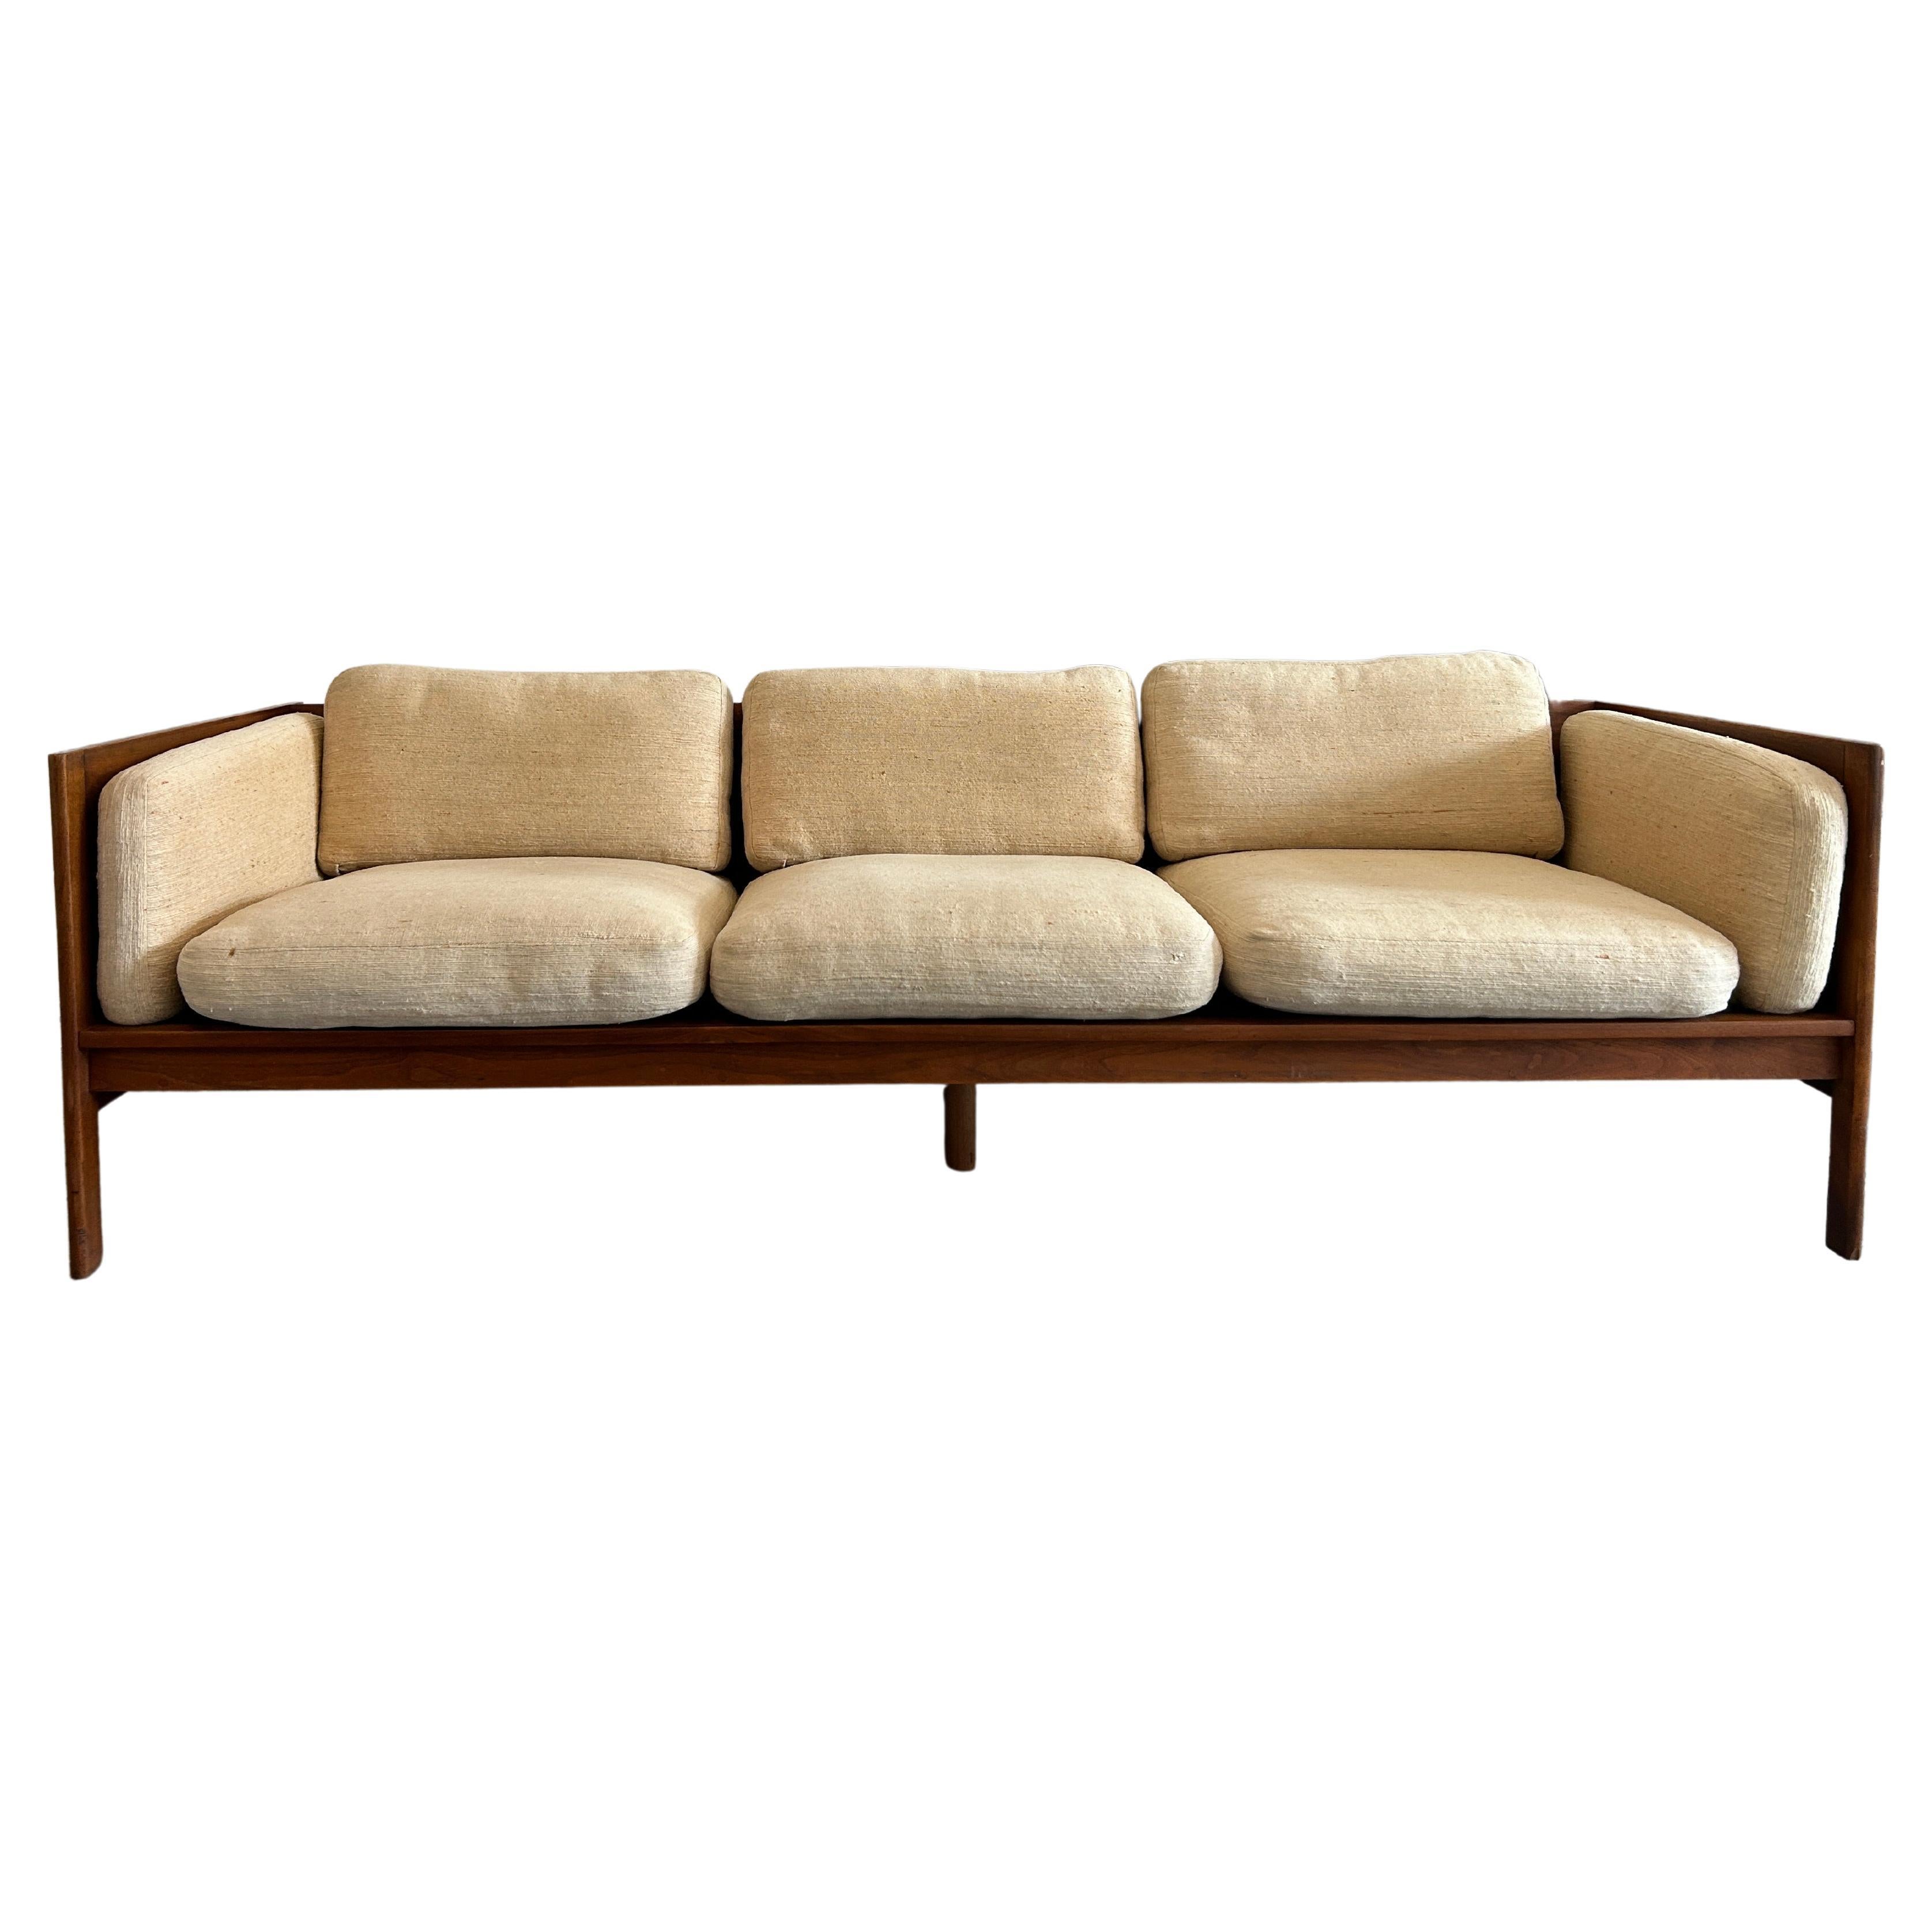 Midcentury Walnut 3 Seat Platform Armed Sofa Daybed by Richard Artschwager For Sale